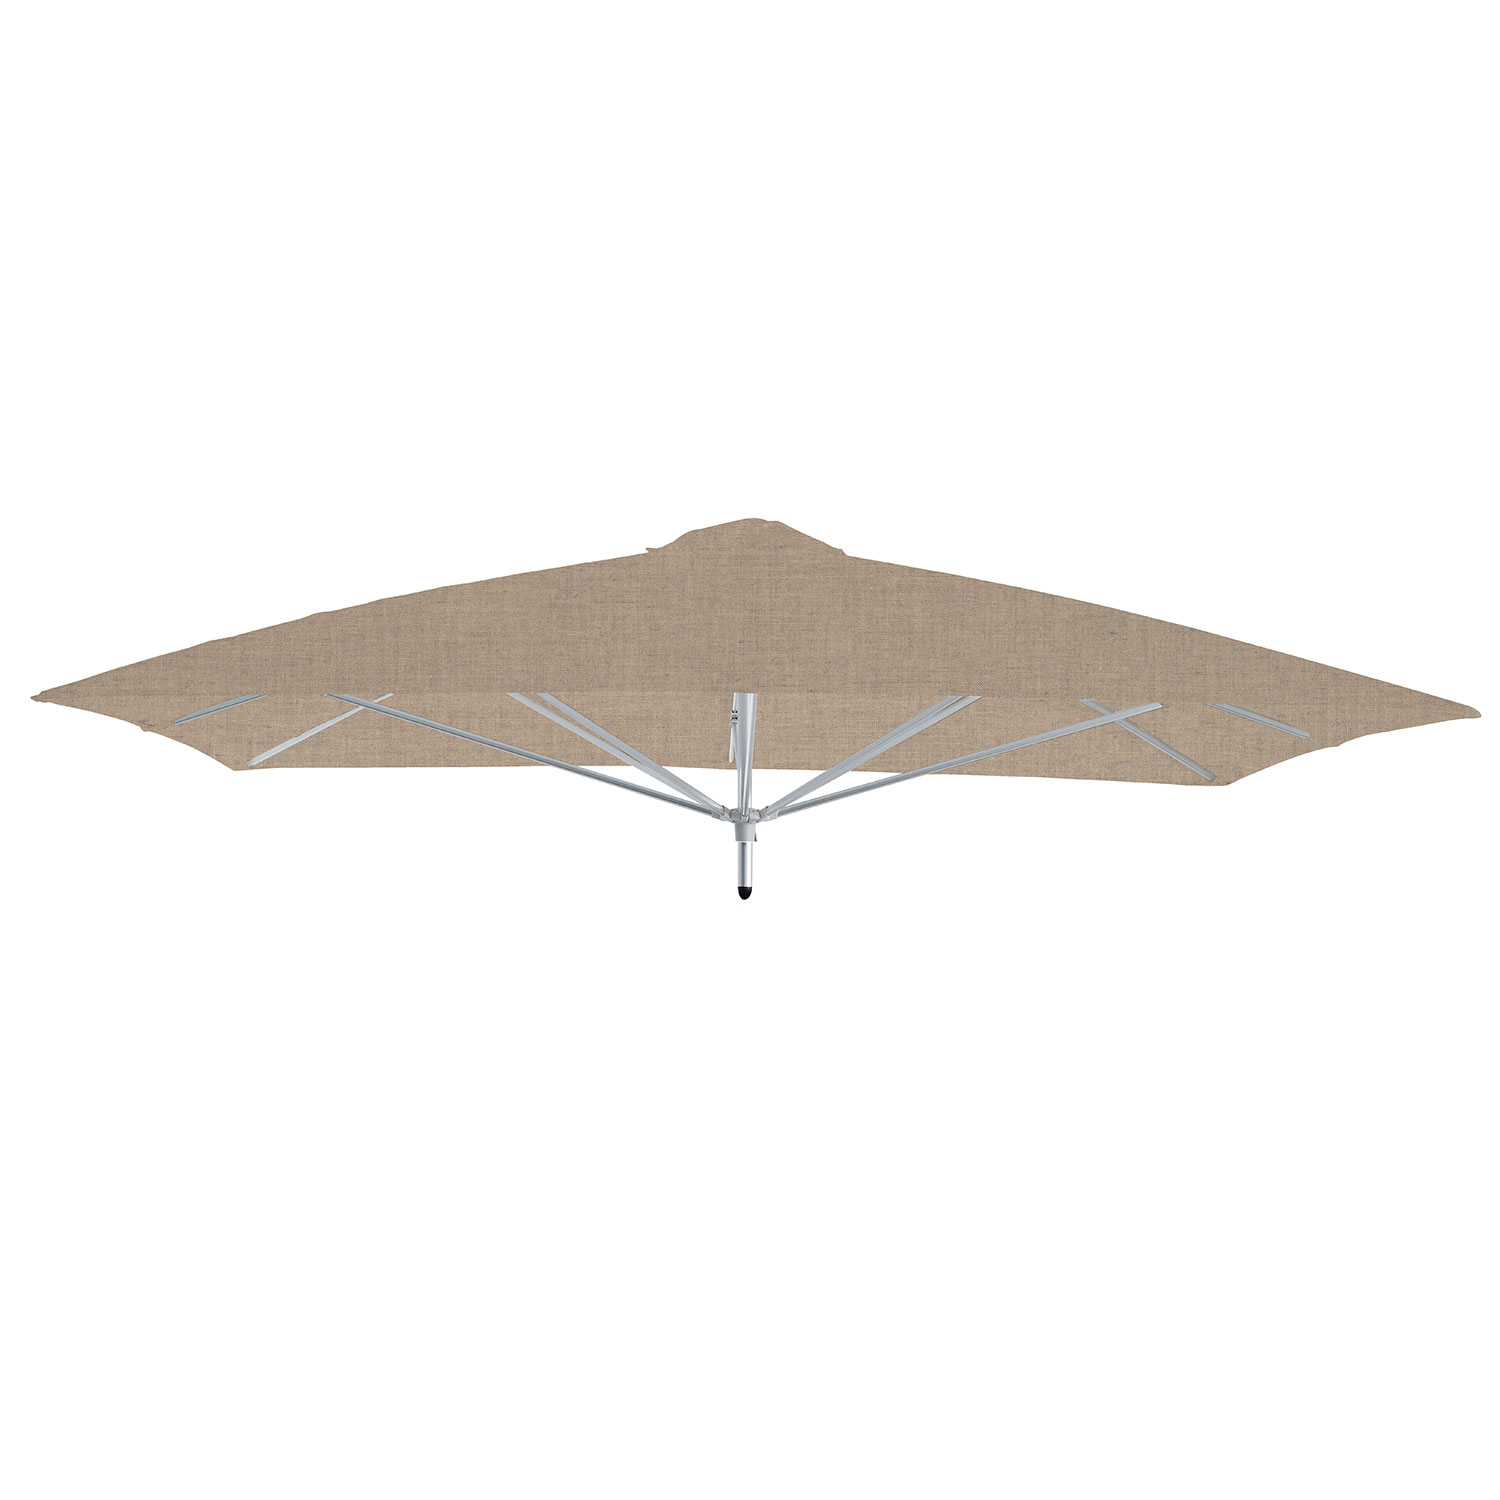 Paraflex Classic parasolkap 190x190cm - Sunbrella (Sand)